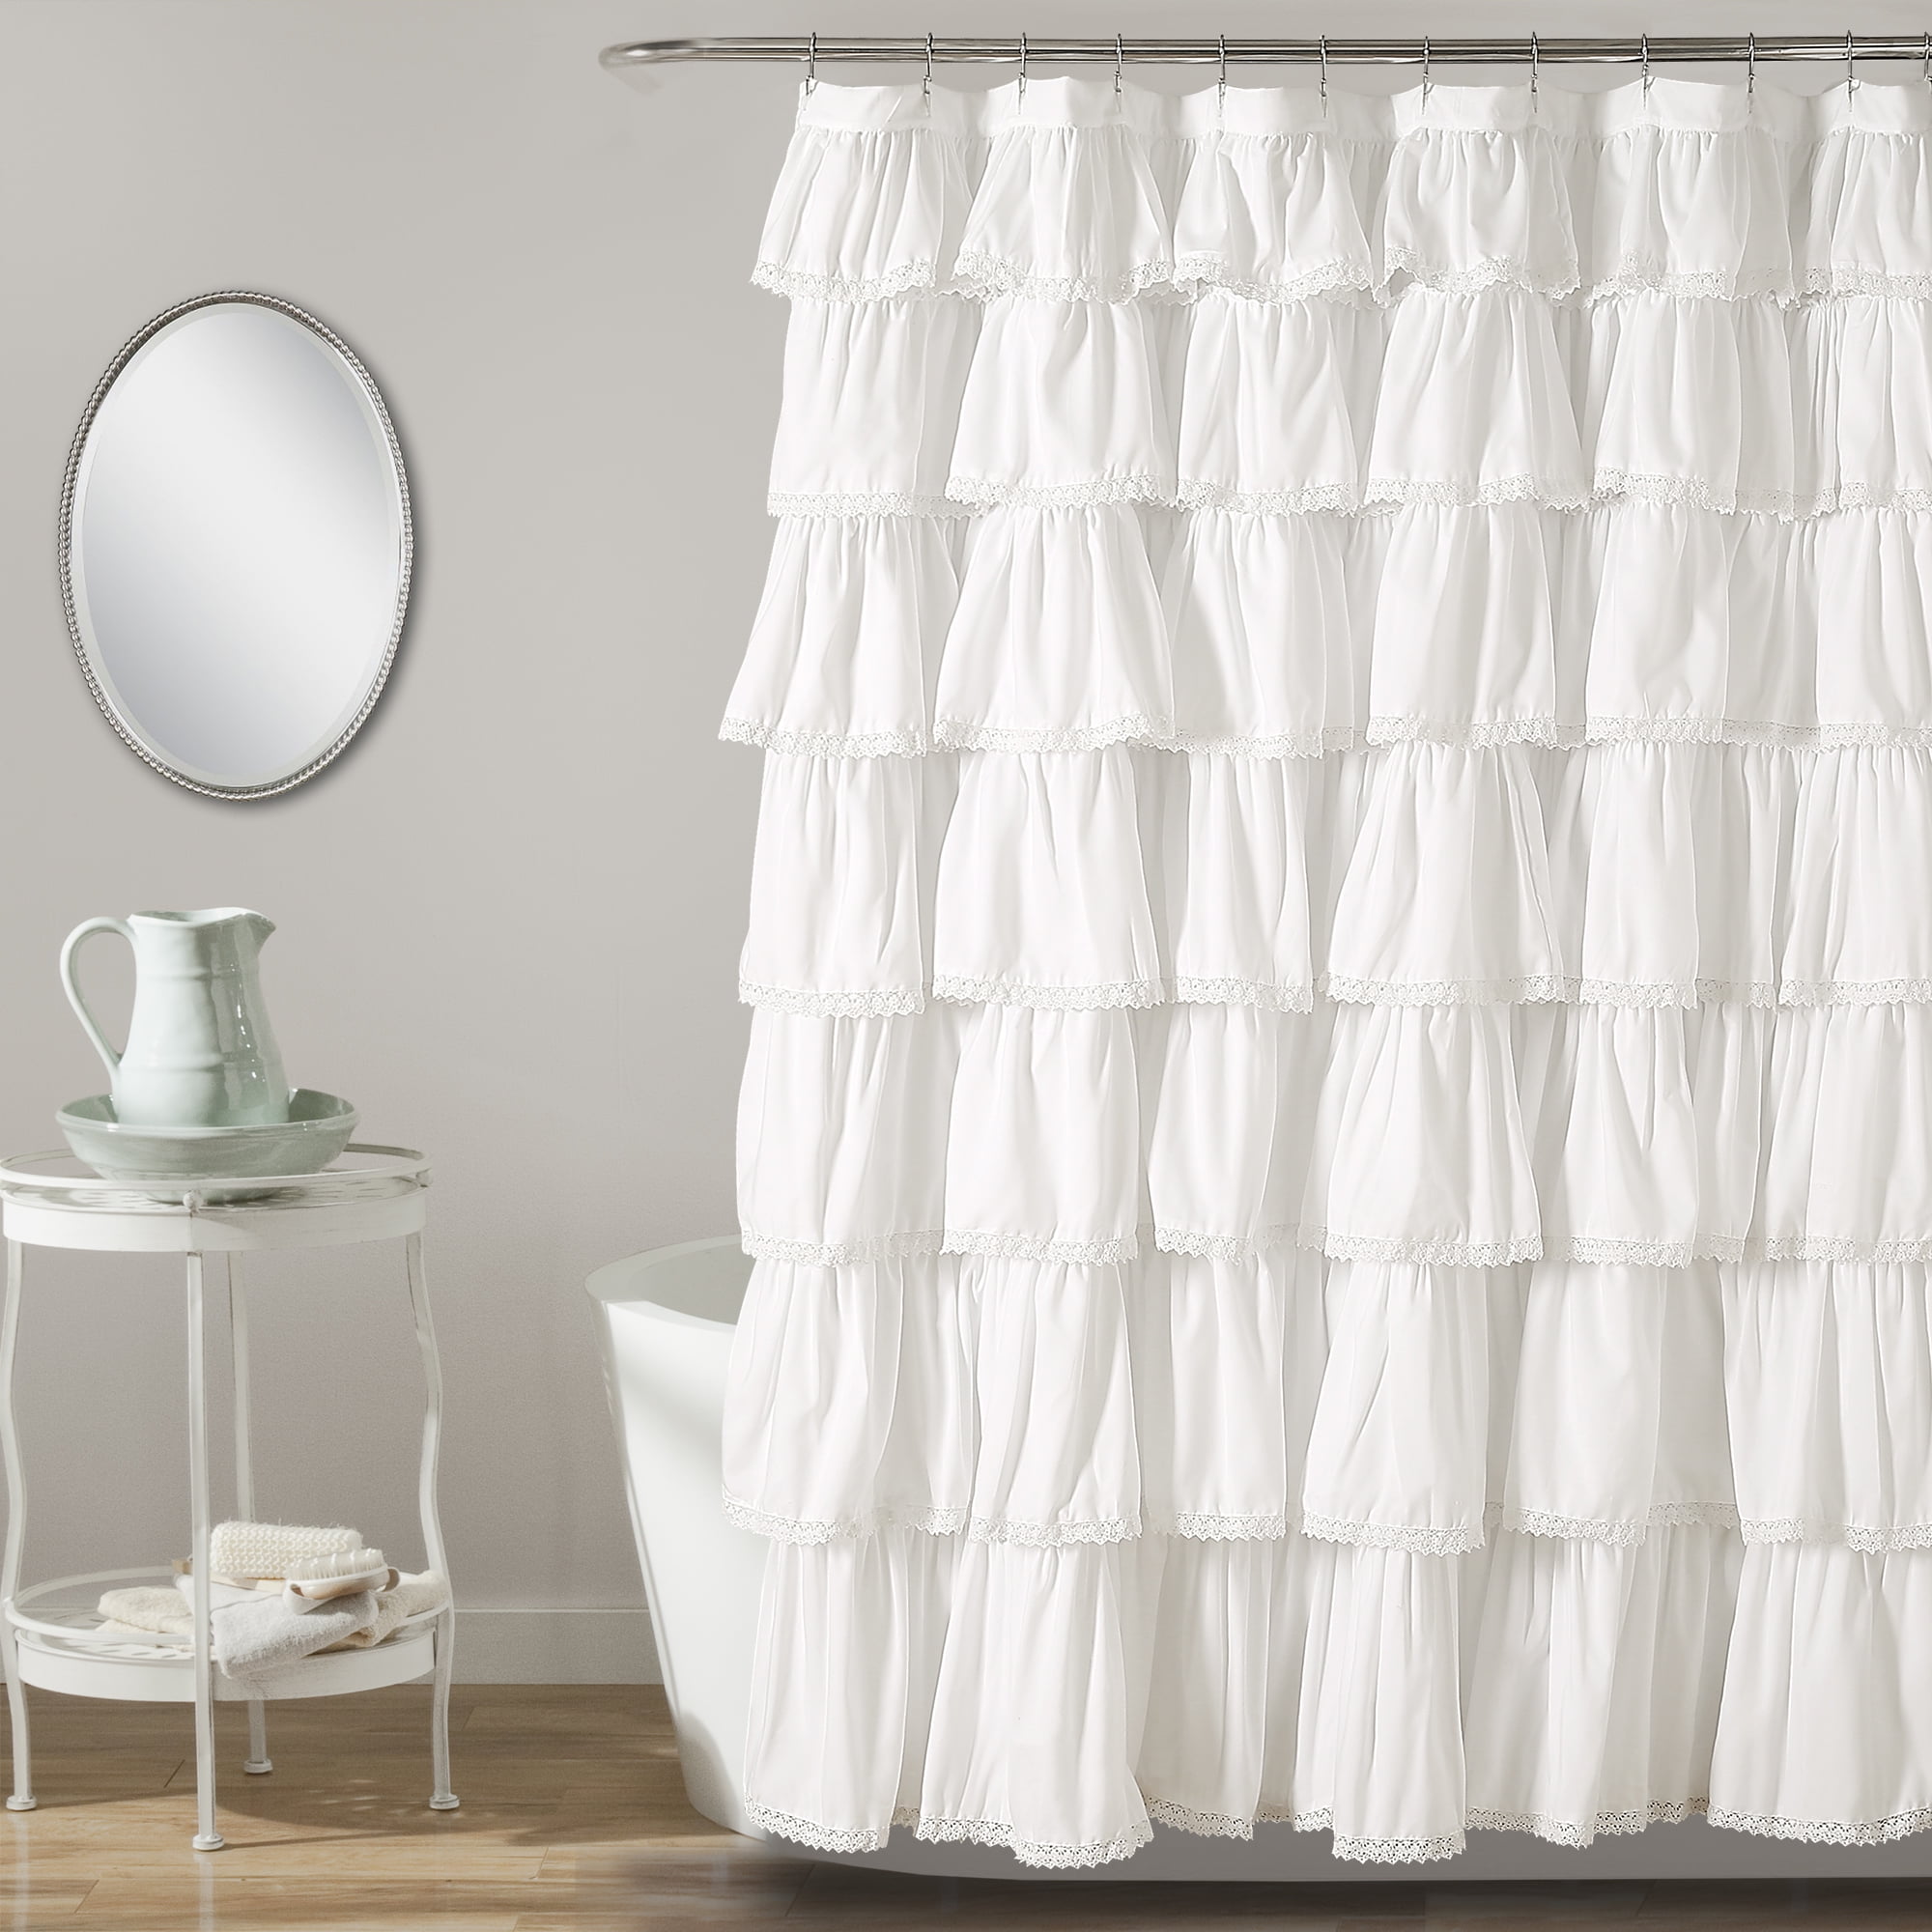 Lace Ruffle Shower Curtain White 72x72